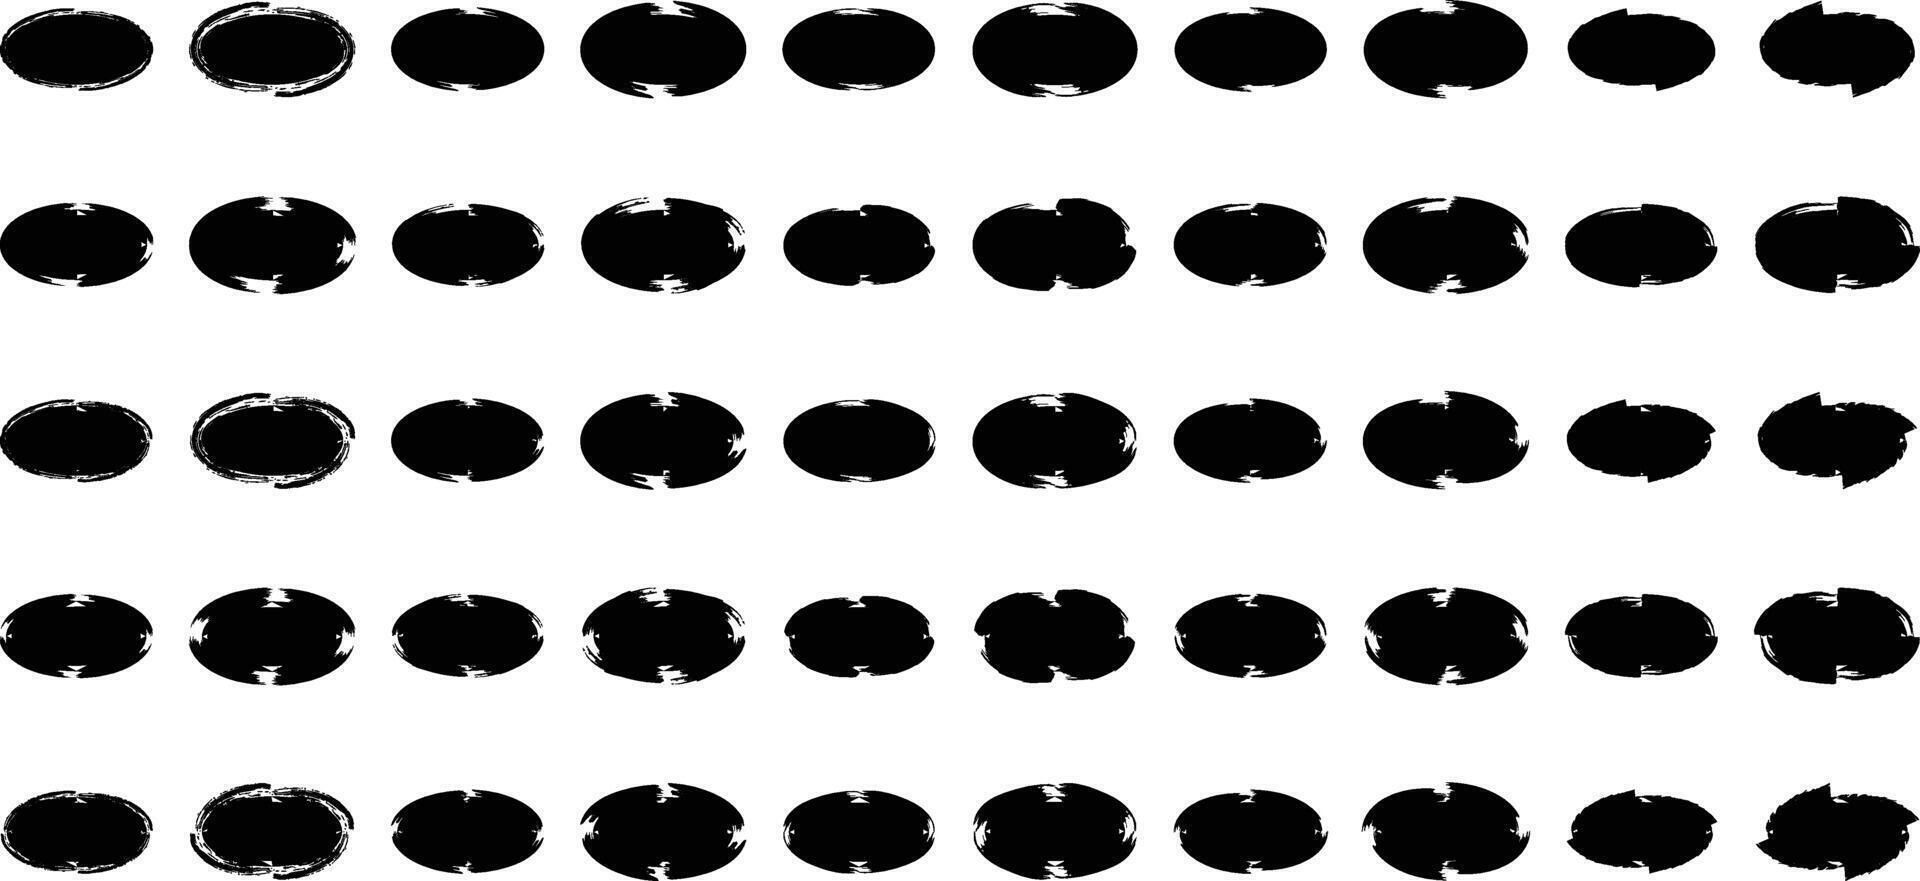 formato oval horizontal preenchidas 50. 10 vetor